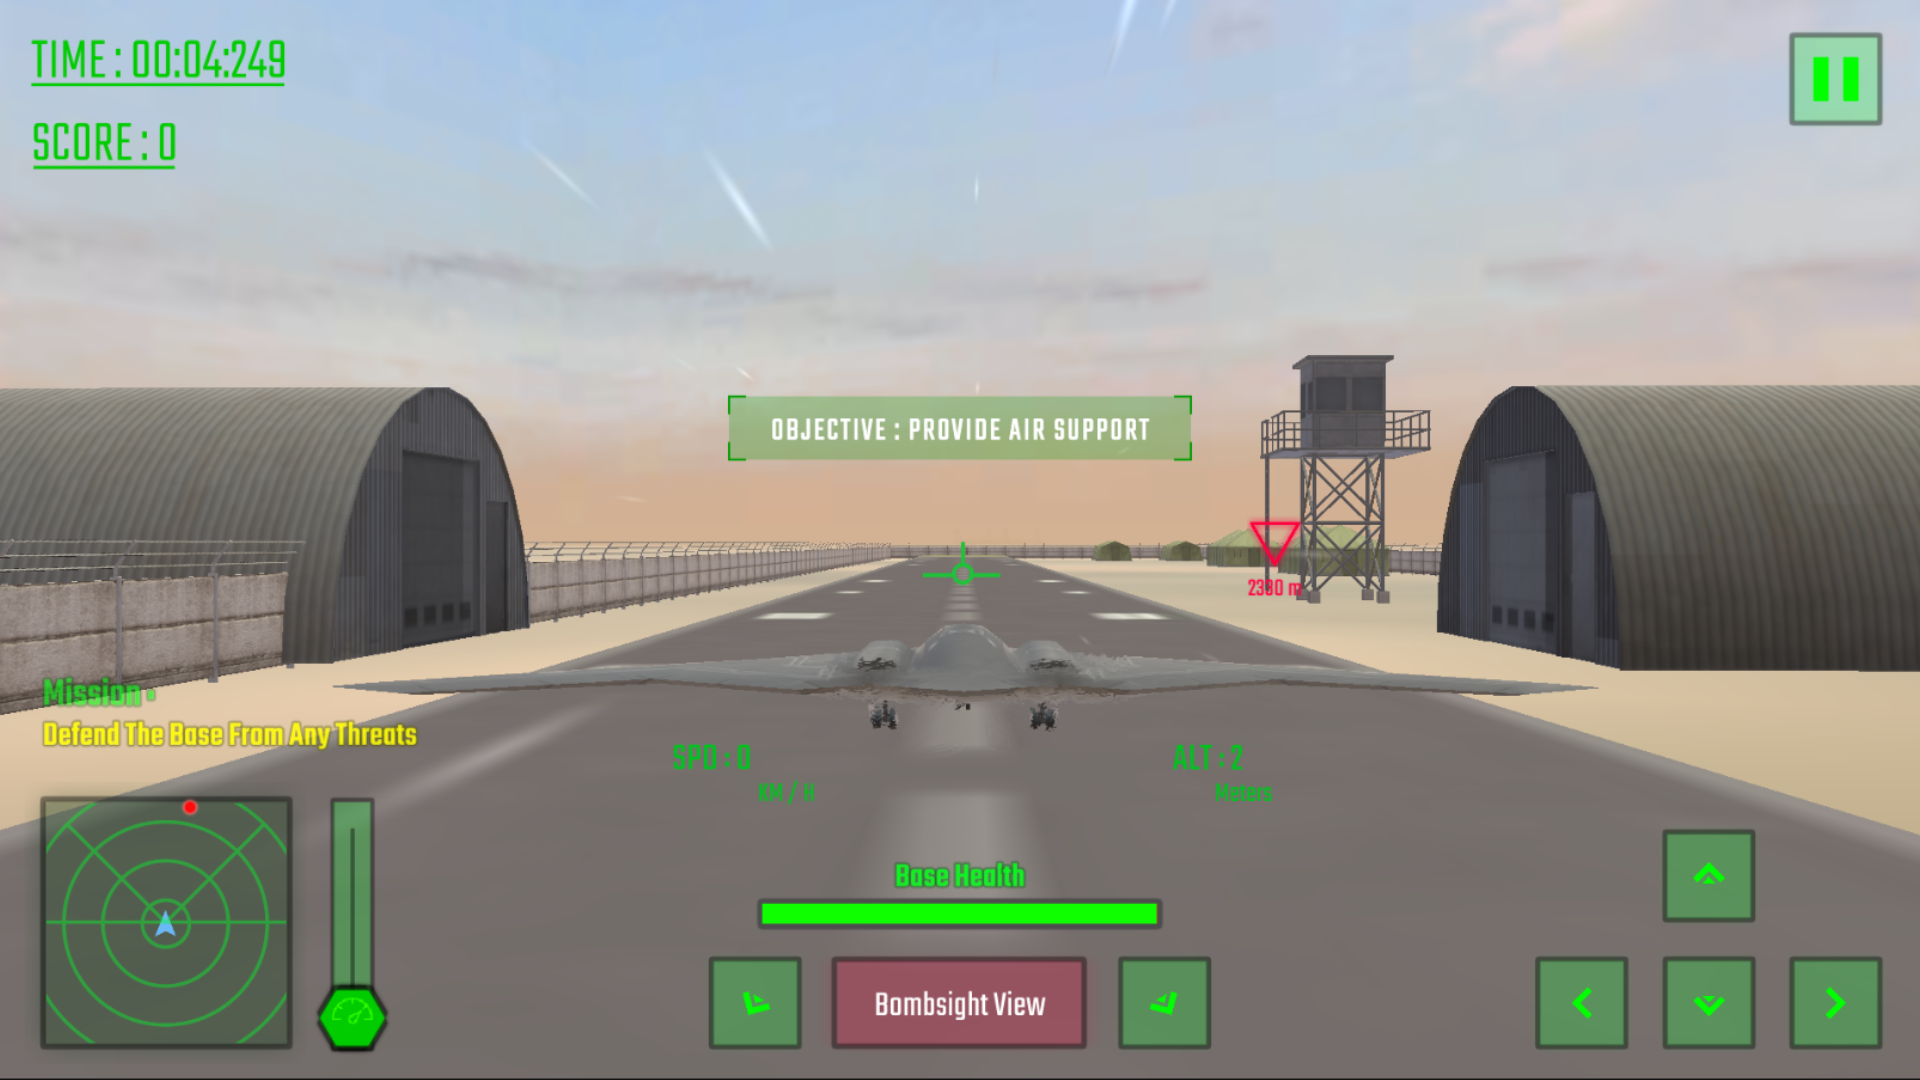 Modern Bomber Mission ภาพหน้าจอเกม